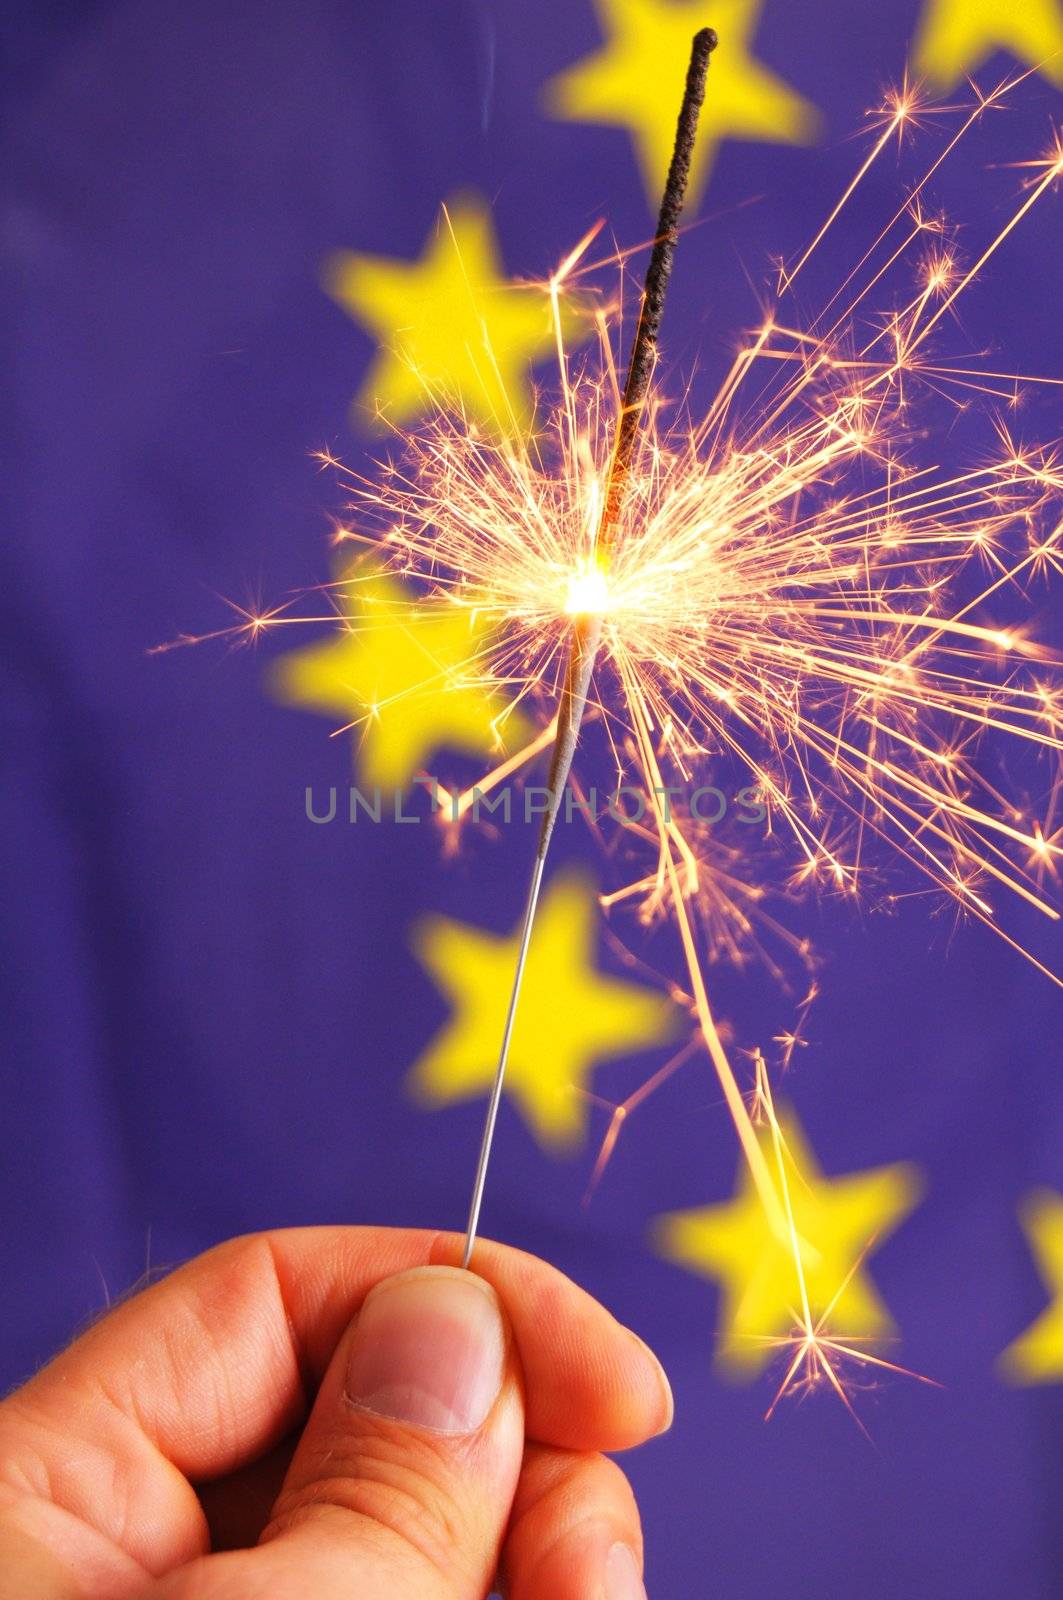 euro union flag and sparkler by gunnar3000